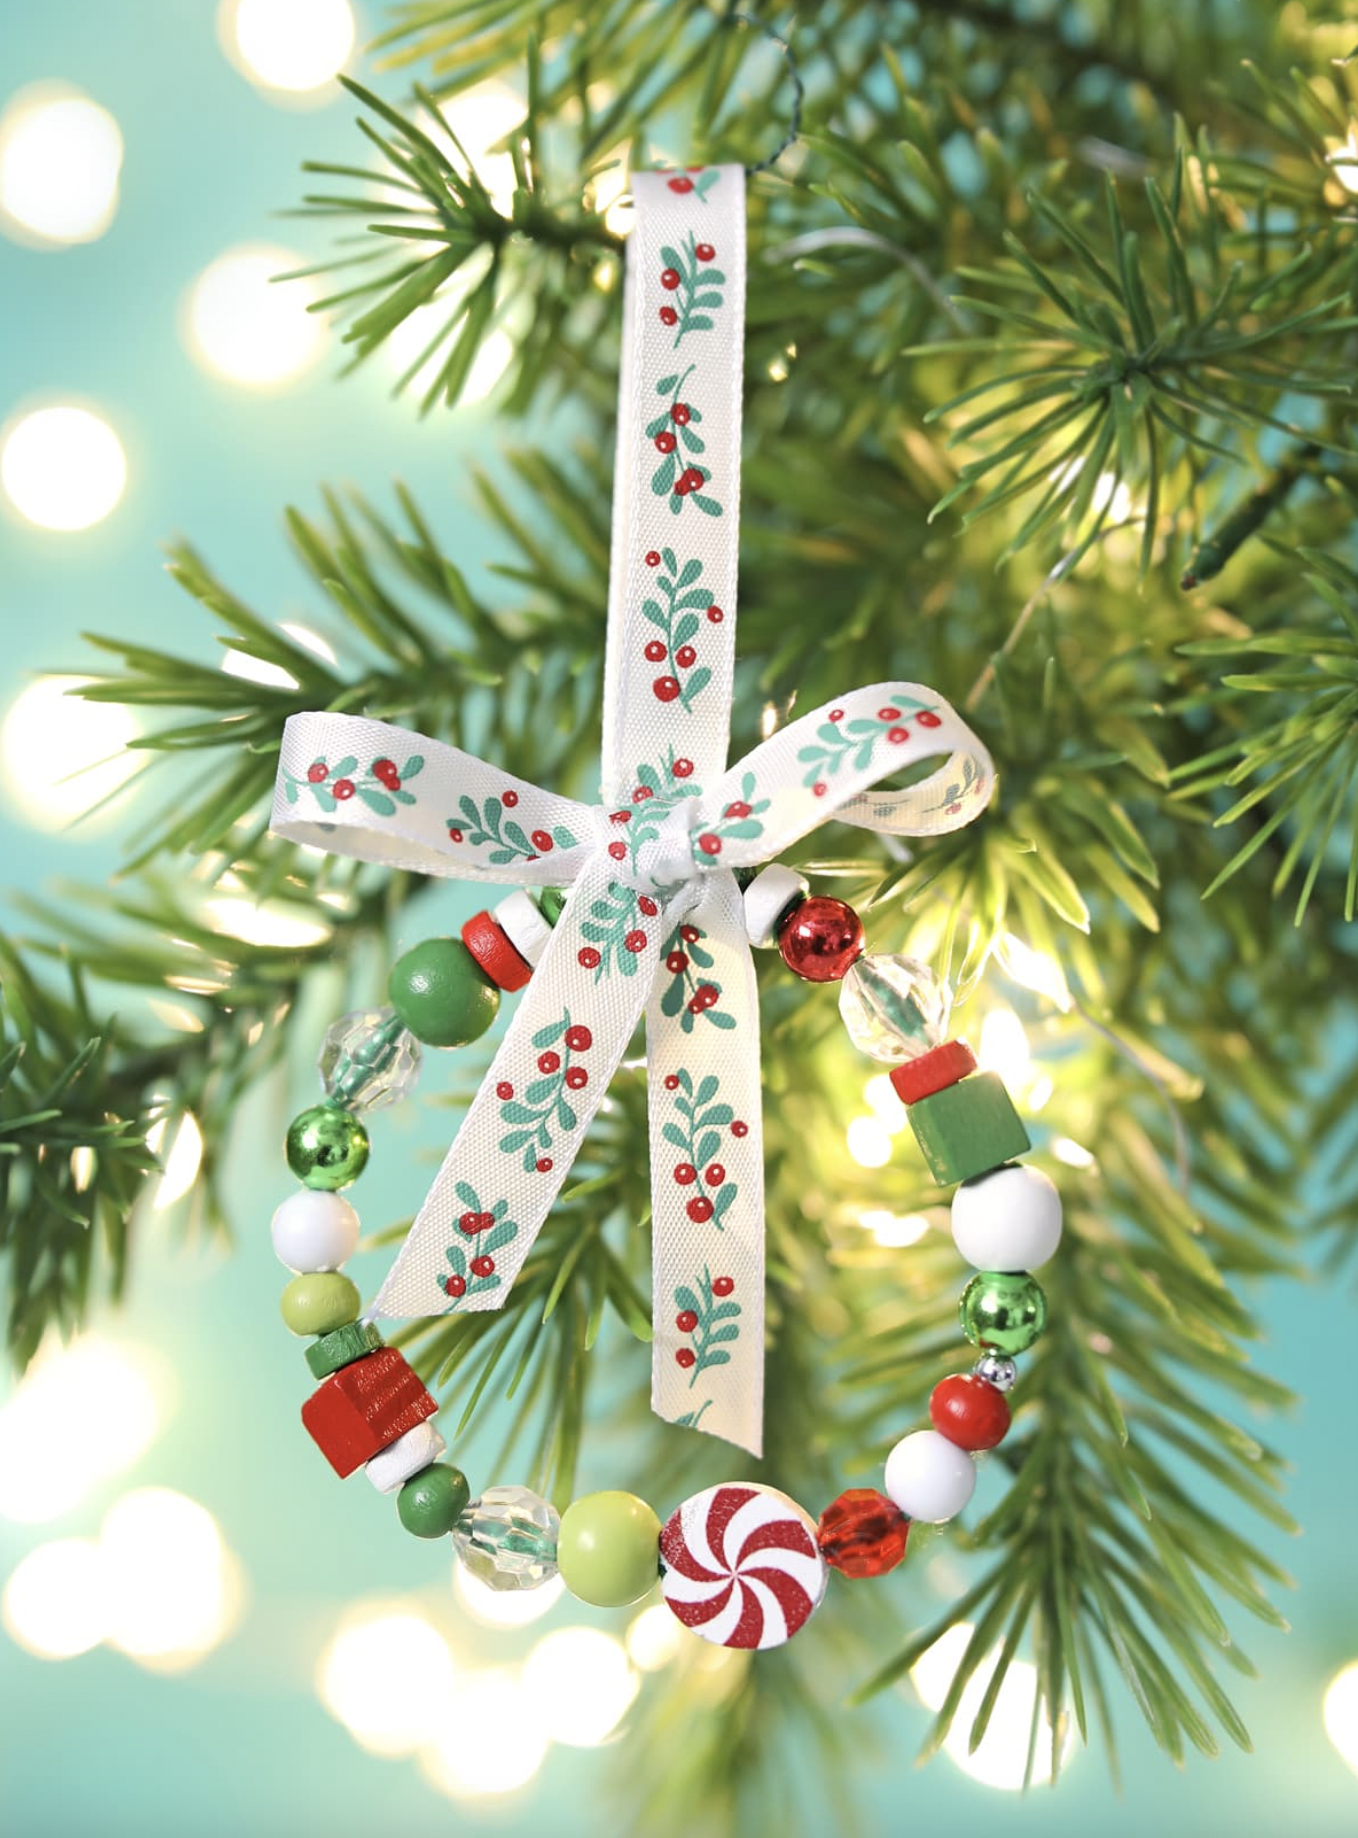 80 DIY and Homemade Christmas Ornaments to Create